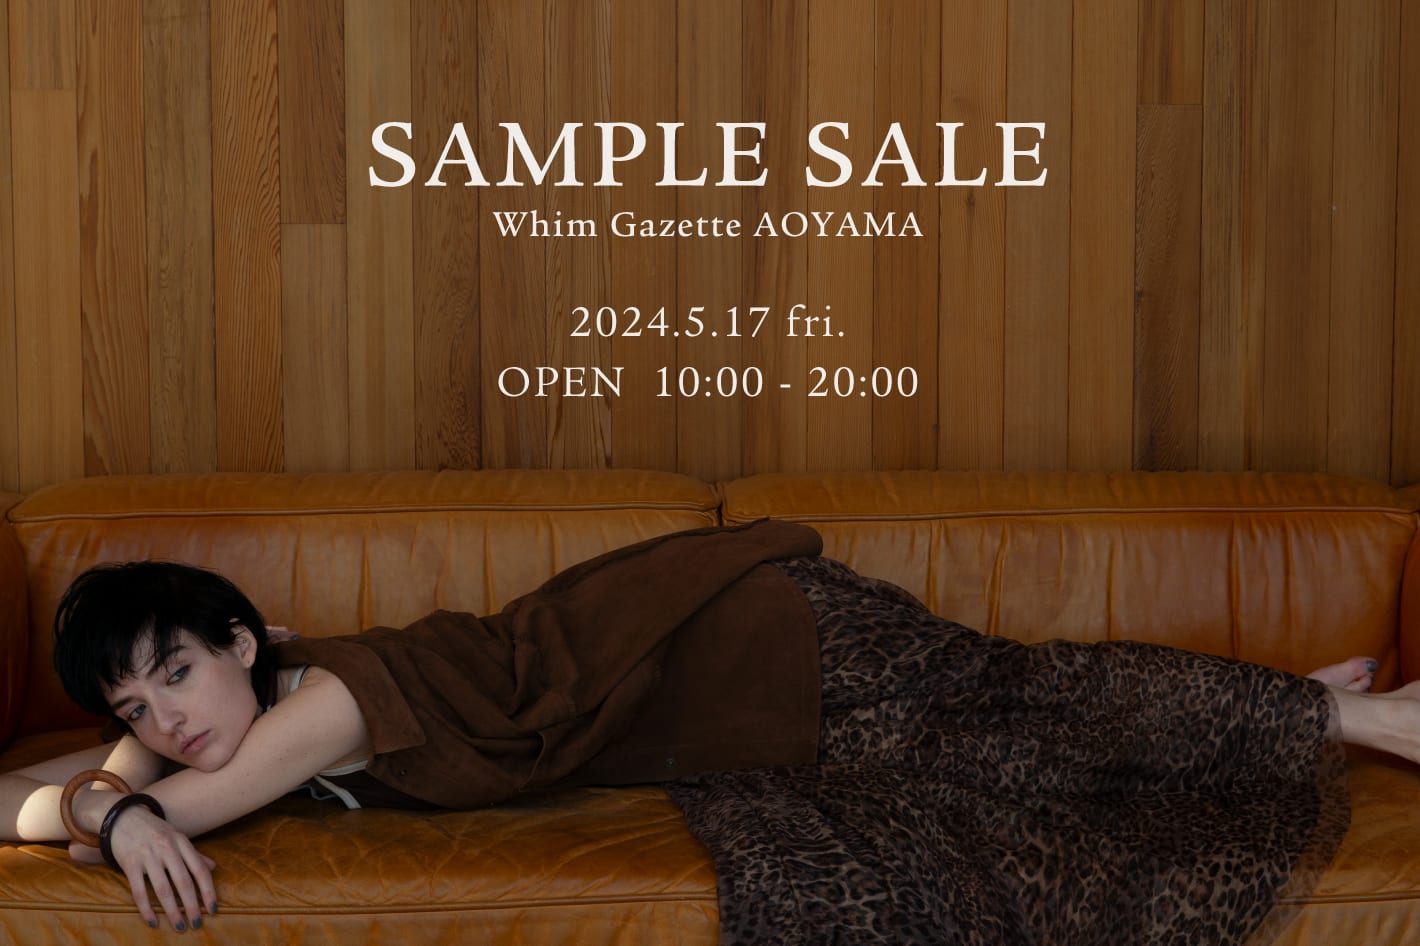 Whim Gazette 【青山店】 SAMPLE SALE開催のお知らせ